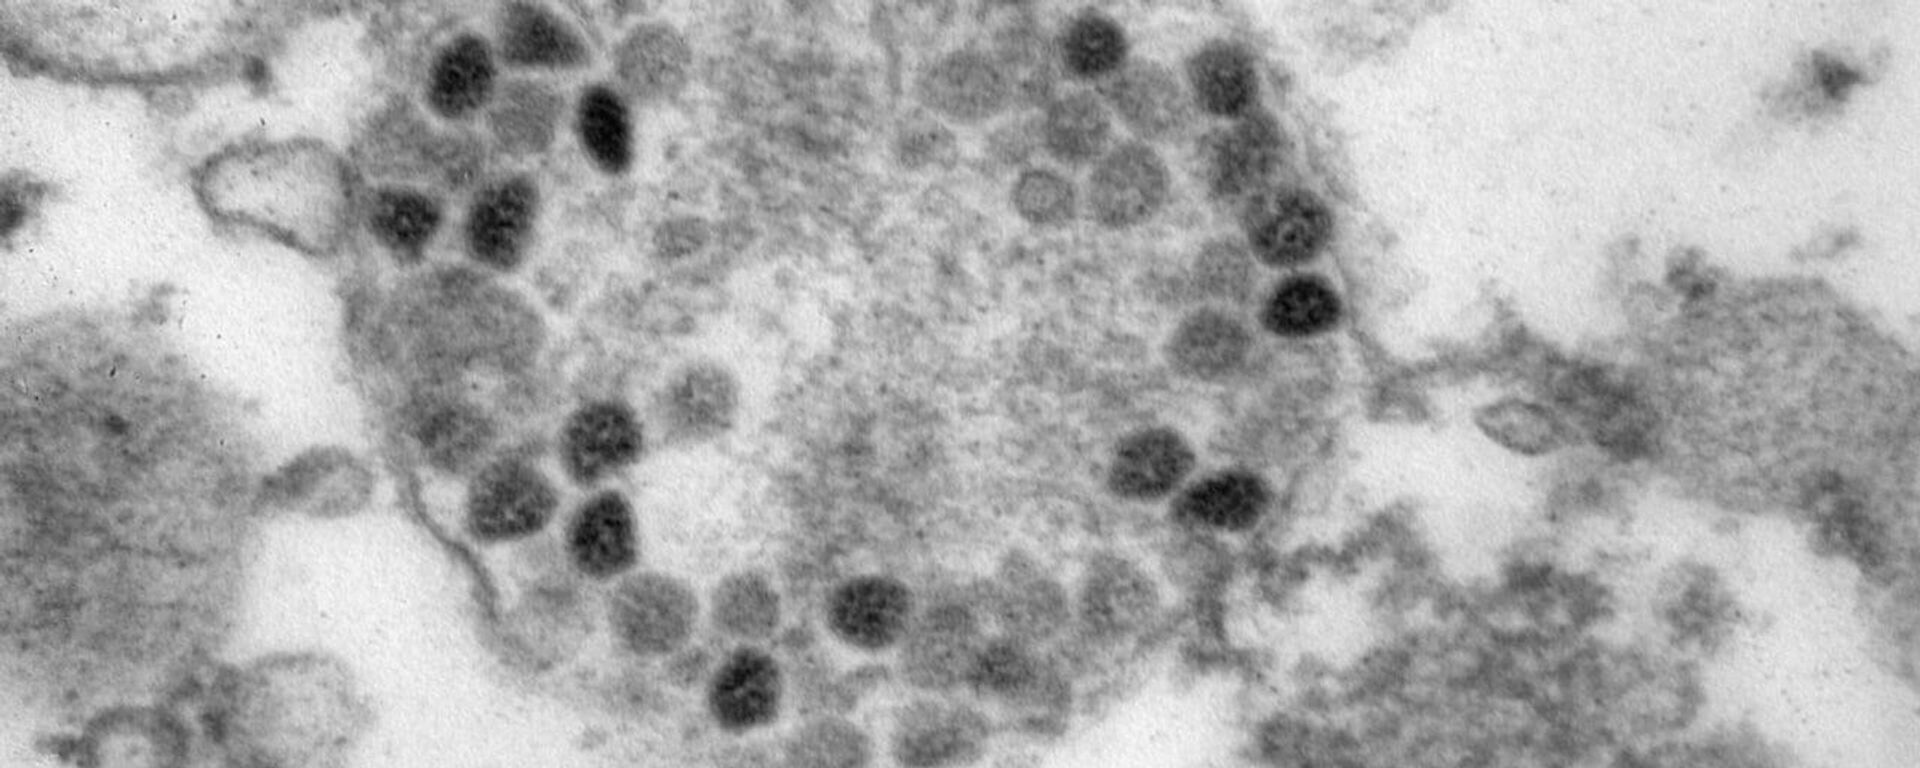 Фото вирусных частиц COVID-19 штамма омикрон - 俄羅斯衛星通訊社, 1920, 26.12.2021